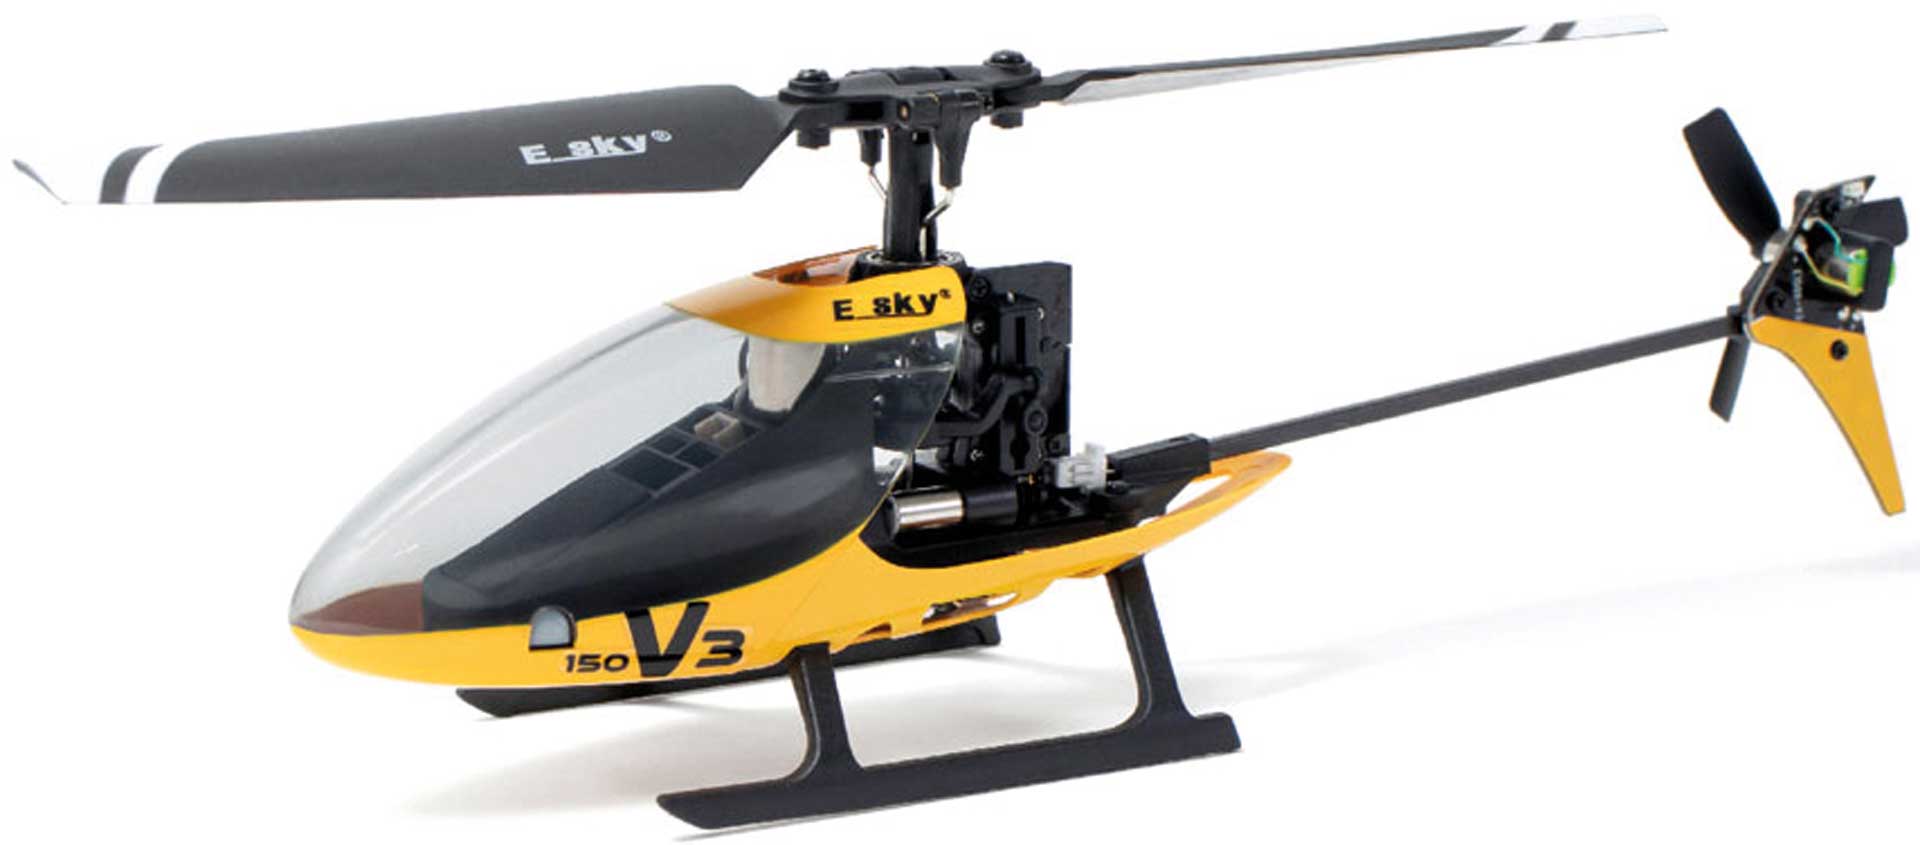 E-SKY 150 V3 Ultra Micro Helicopter - RTF (Mode 1)